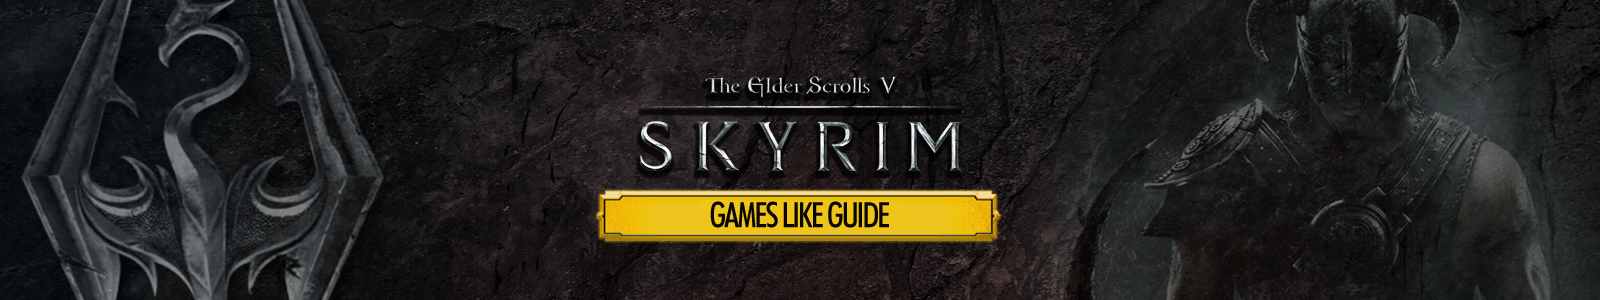 The Elder Scrolls 6 games like guide